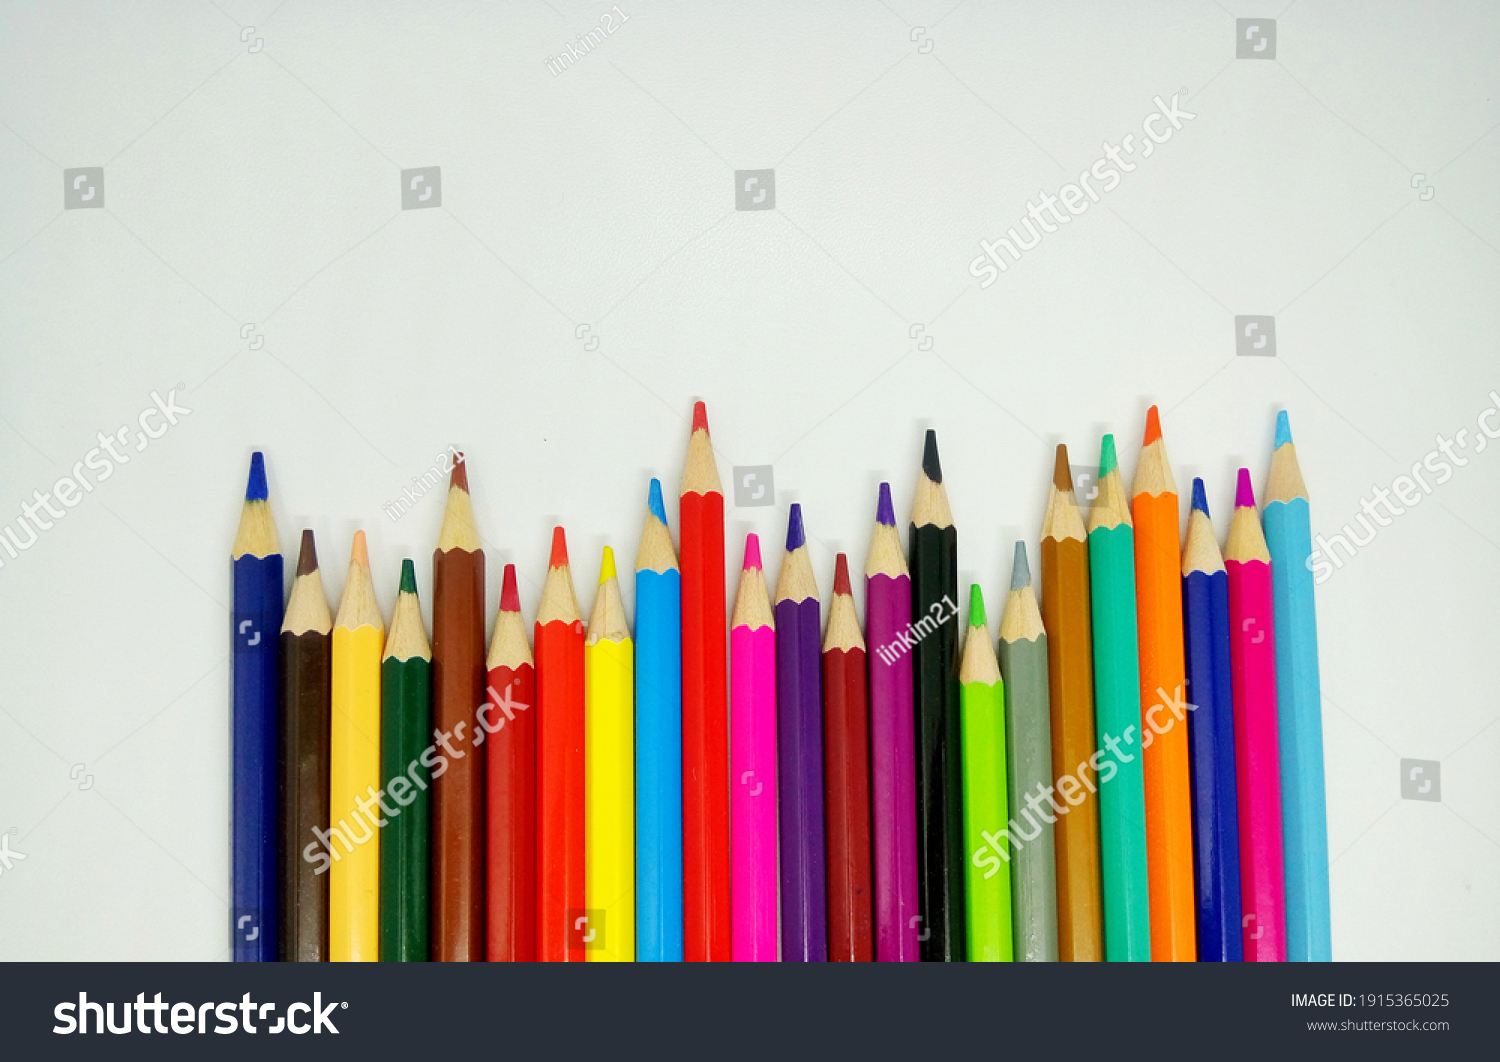 1,319,180 Coloring pencils Images, Stock Photos & Vectors | Shutterstock